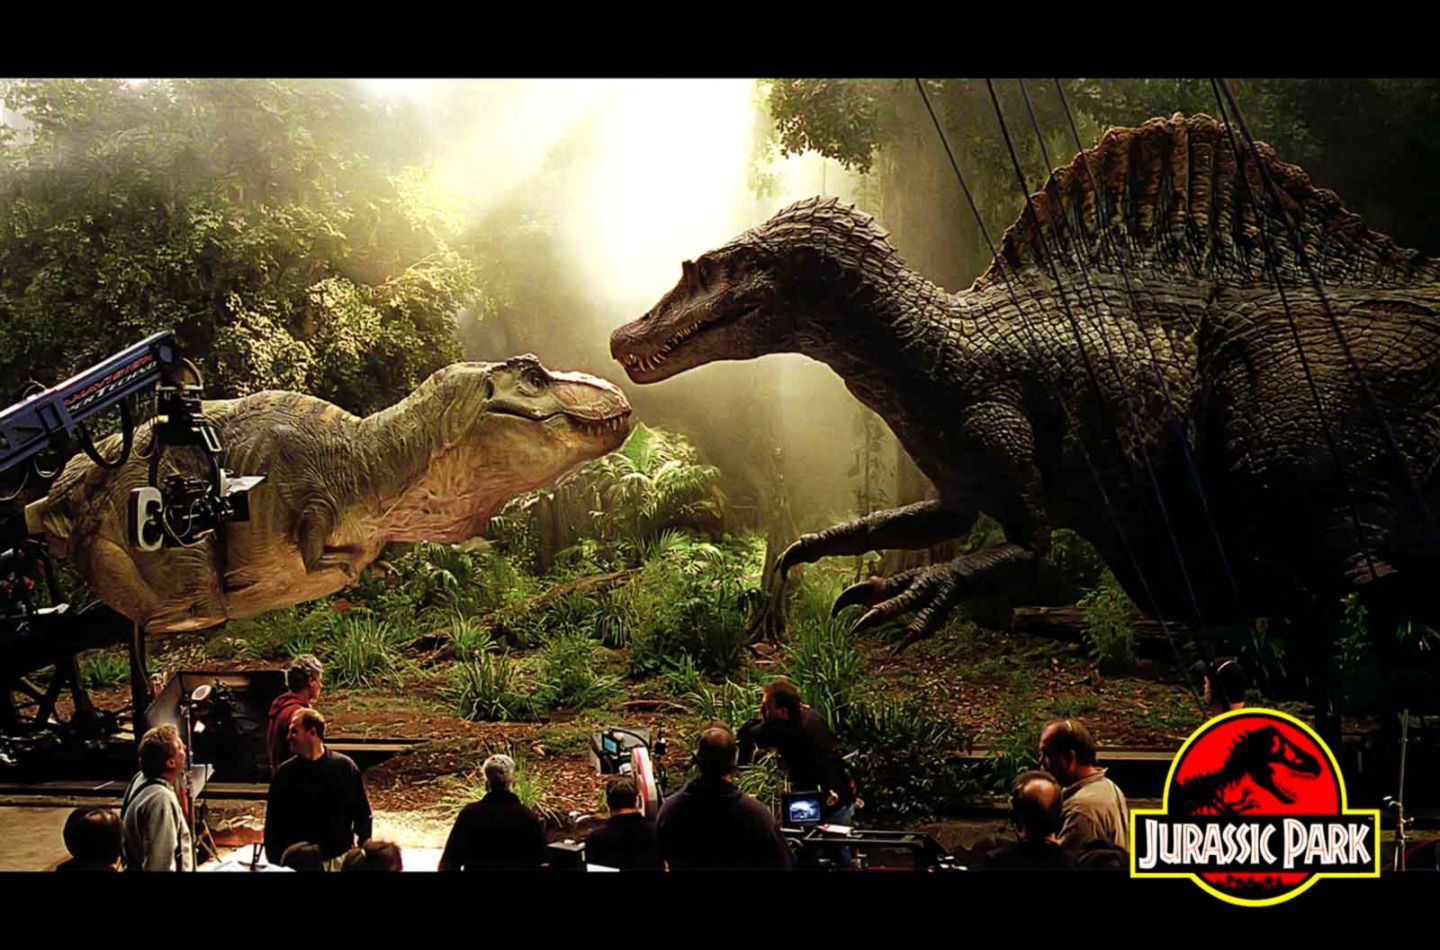 Jurassic Park 4 Latest Hd Wallpapers Descarga gratuita | Fondos de PC